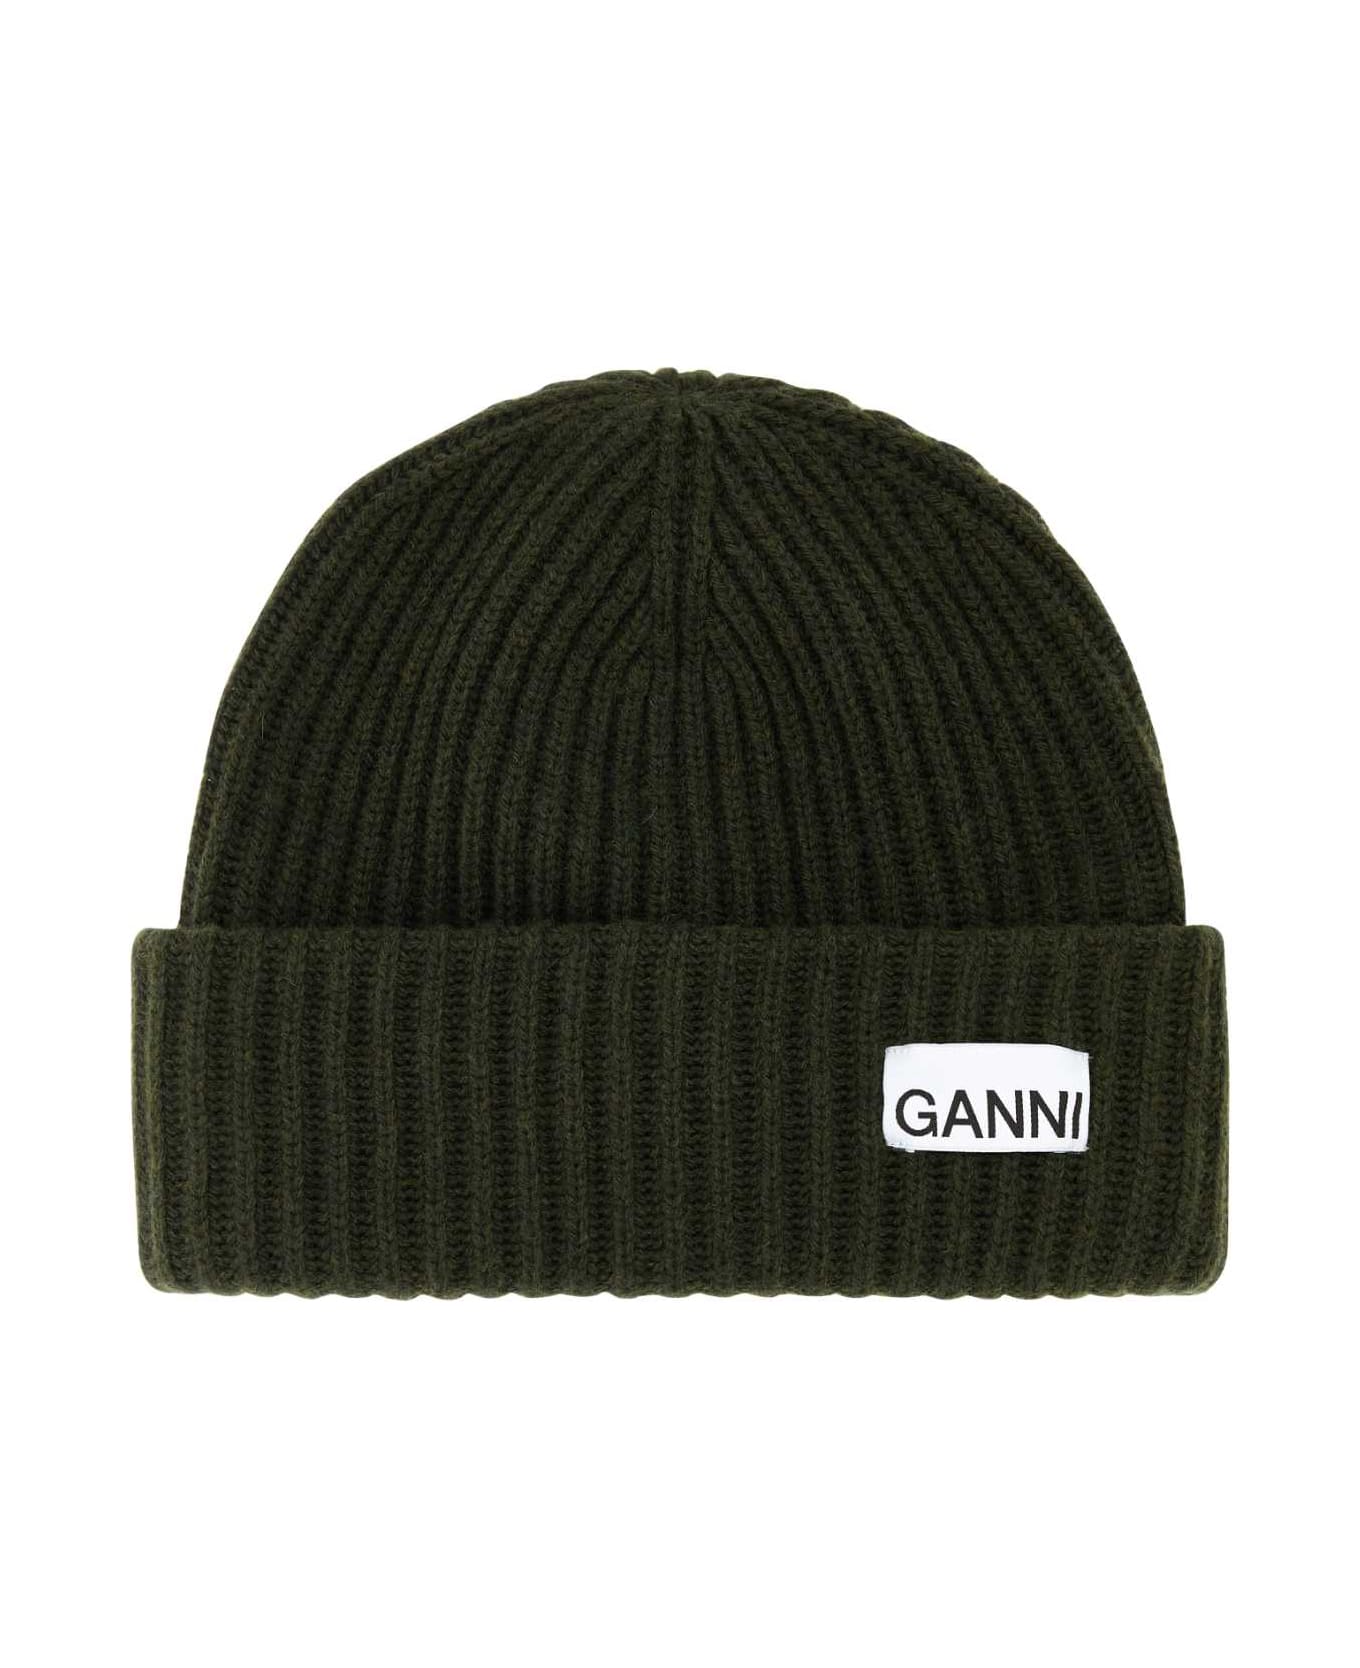 Ganni Army Green Wool Blend Beanie Hat - KALAMATA